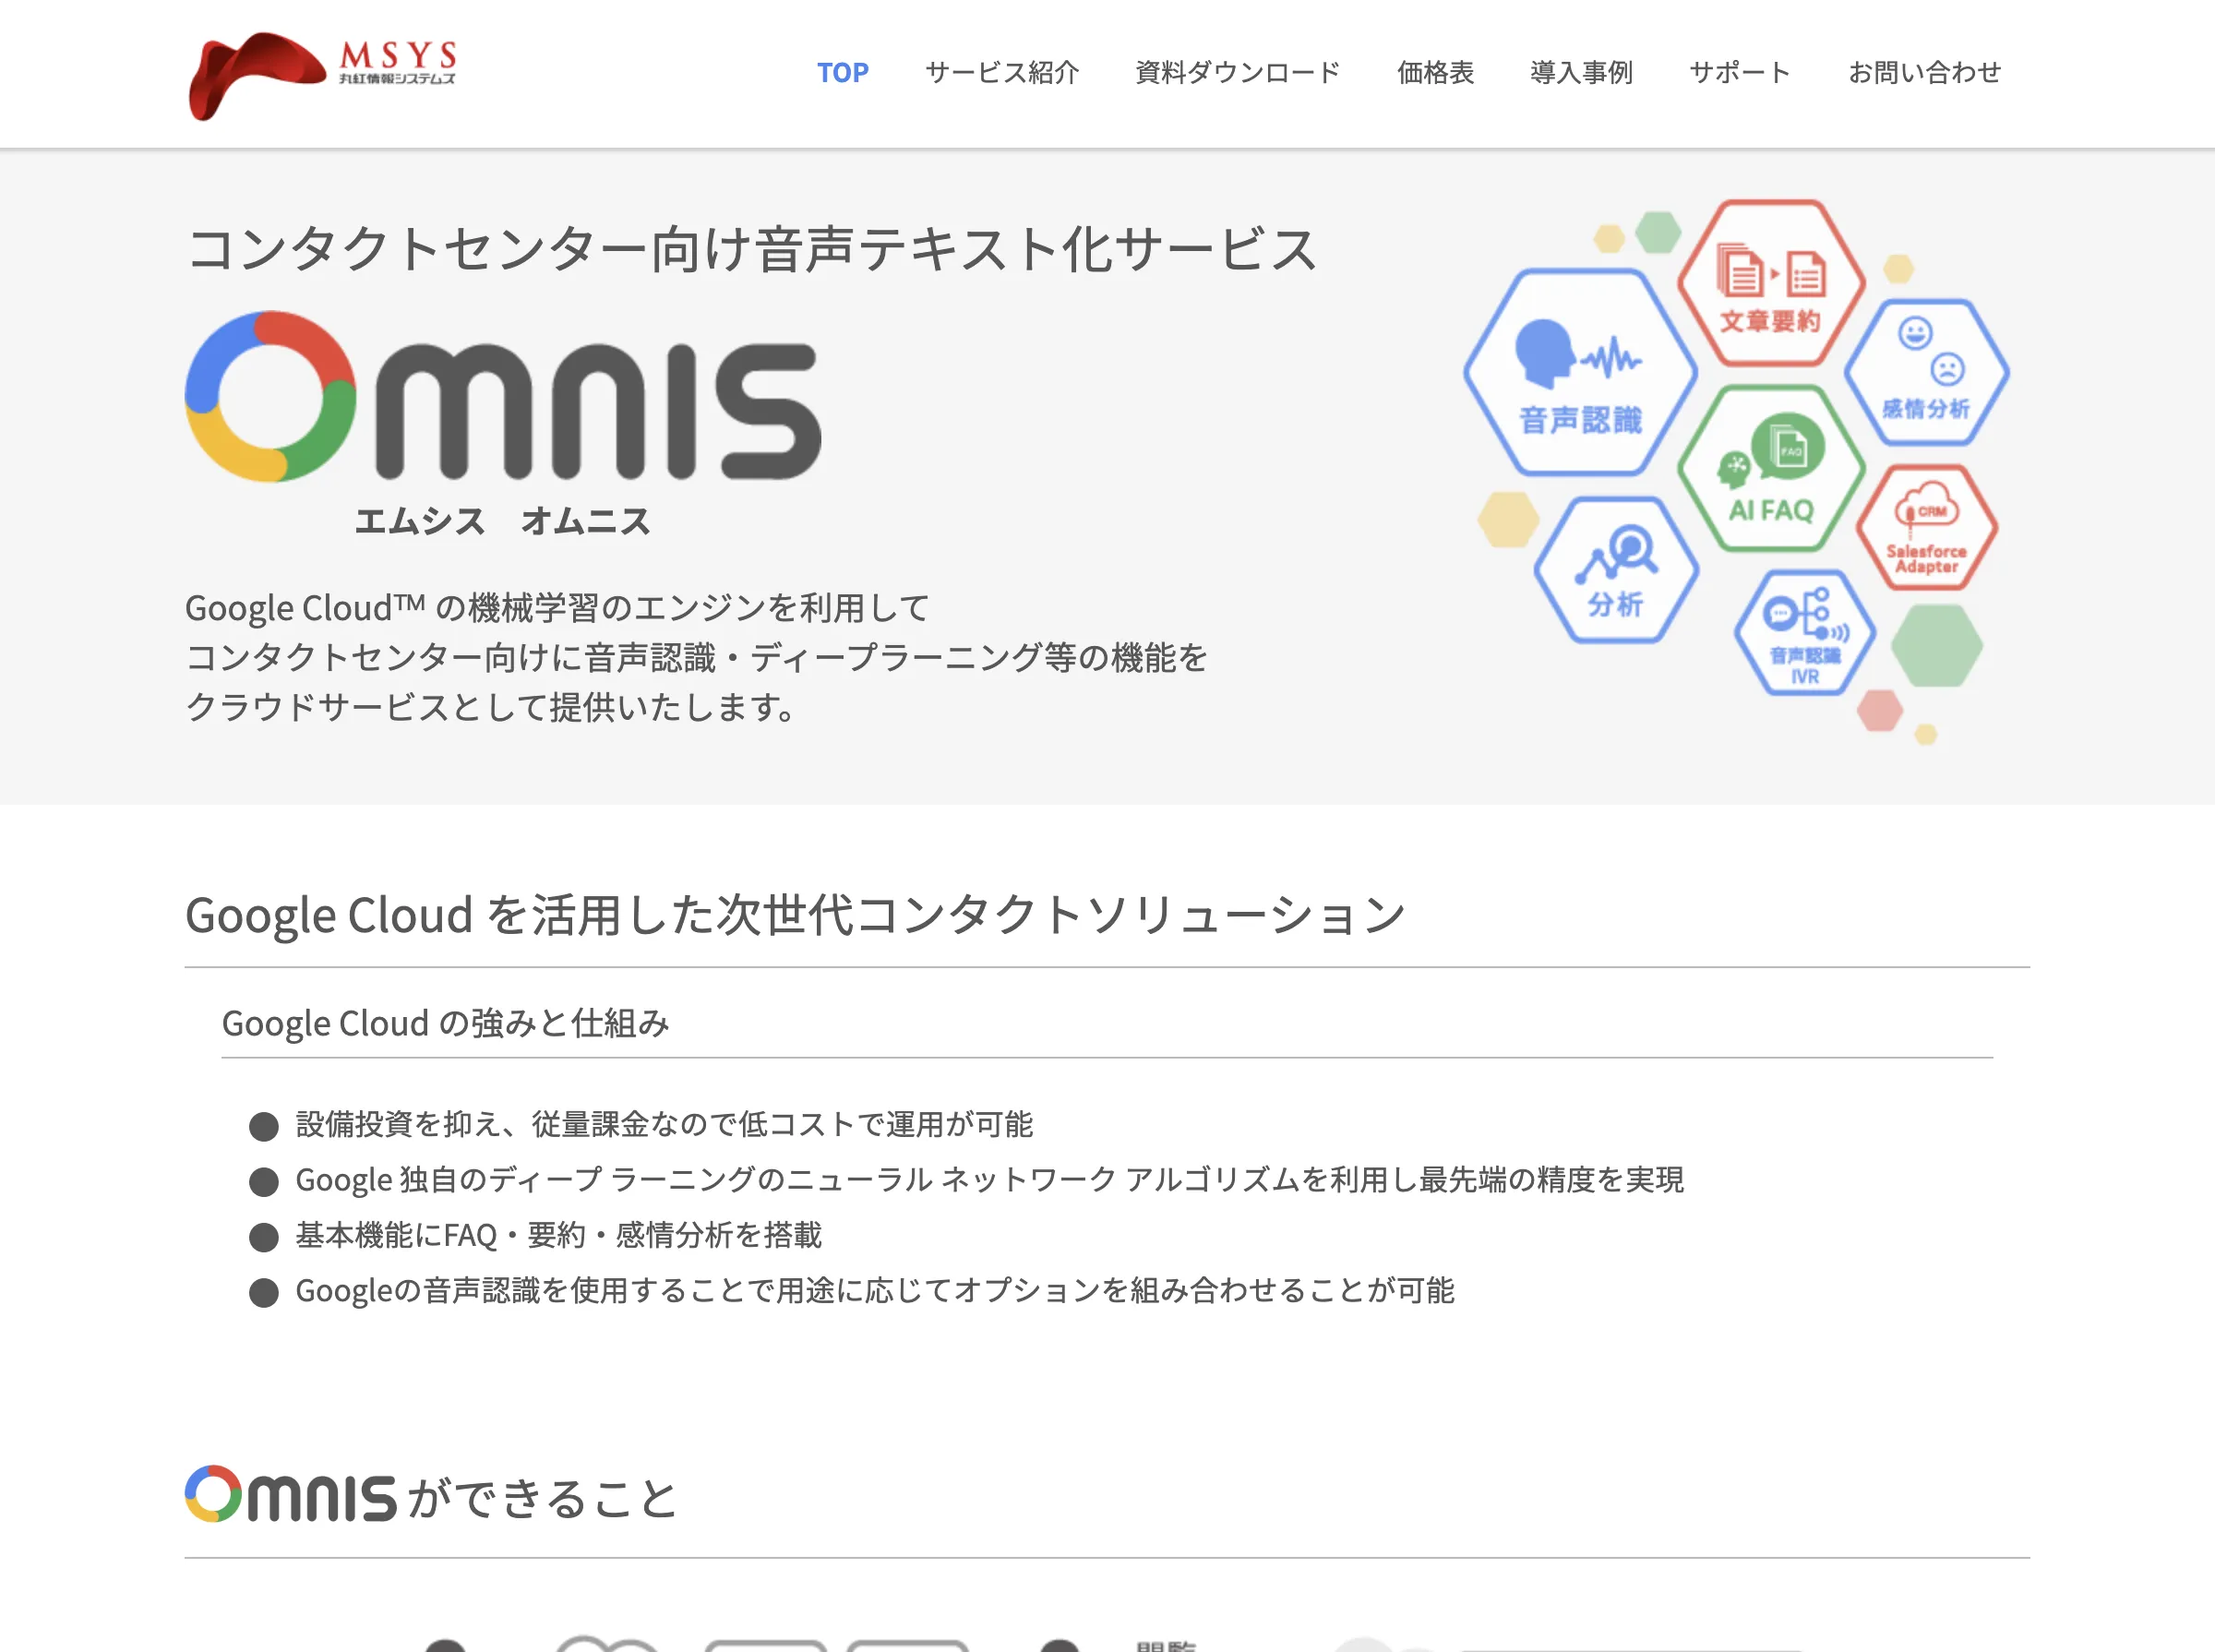 MSYS Omnis(丸紅情報システムズ株式会社)